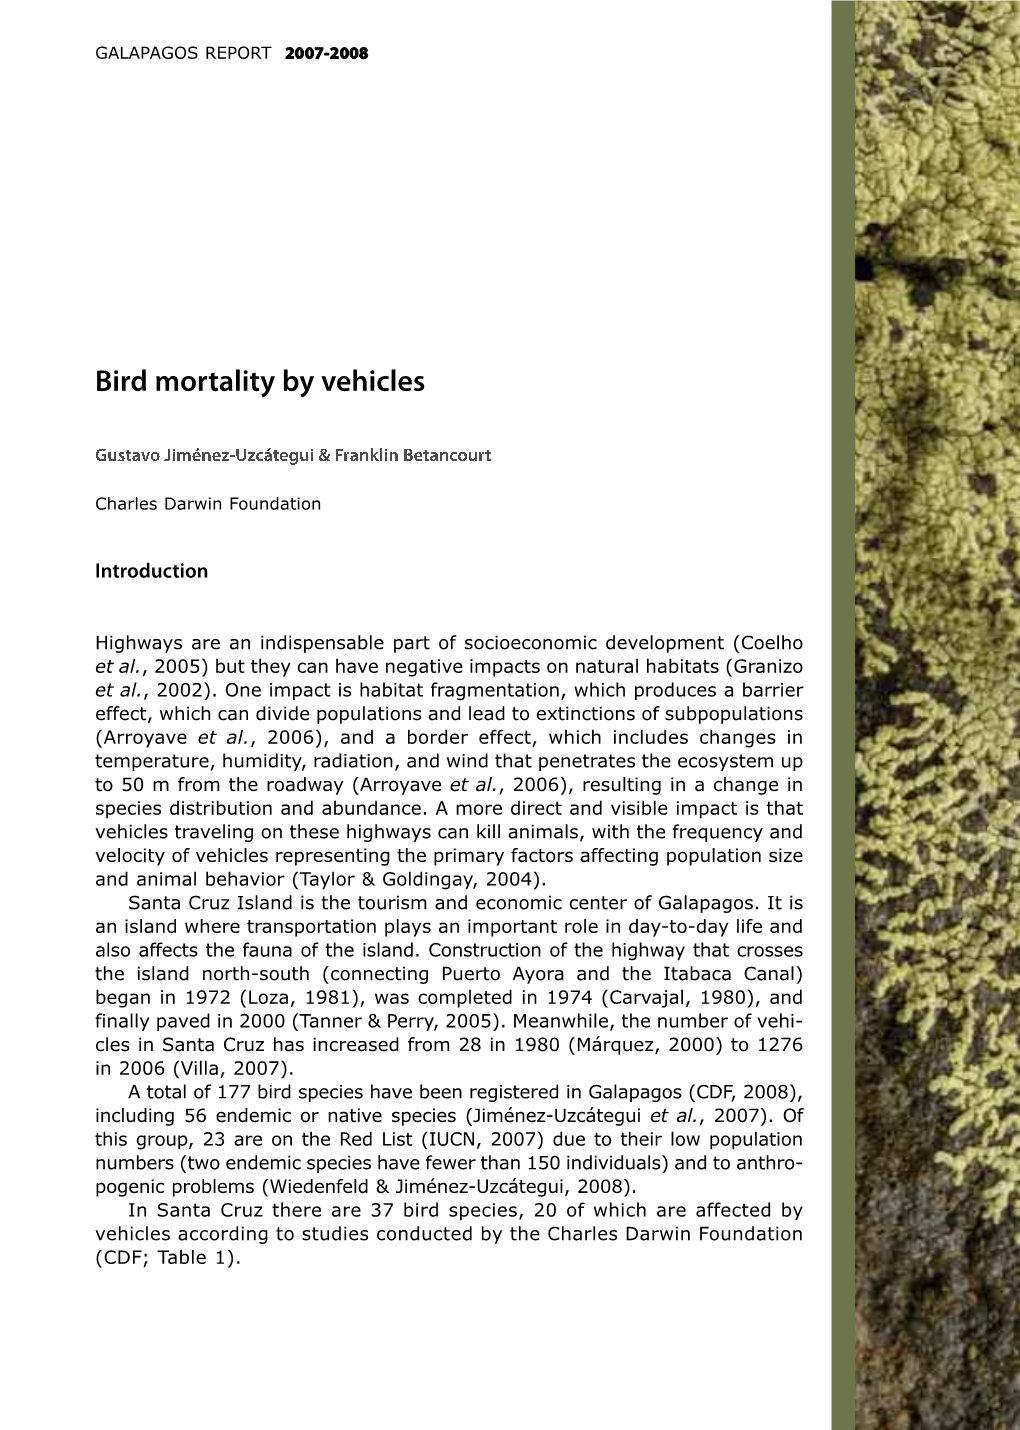 Bird Mortality by Vehicles